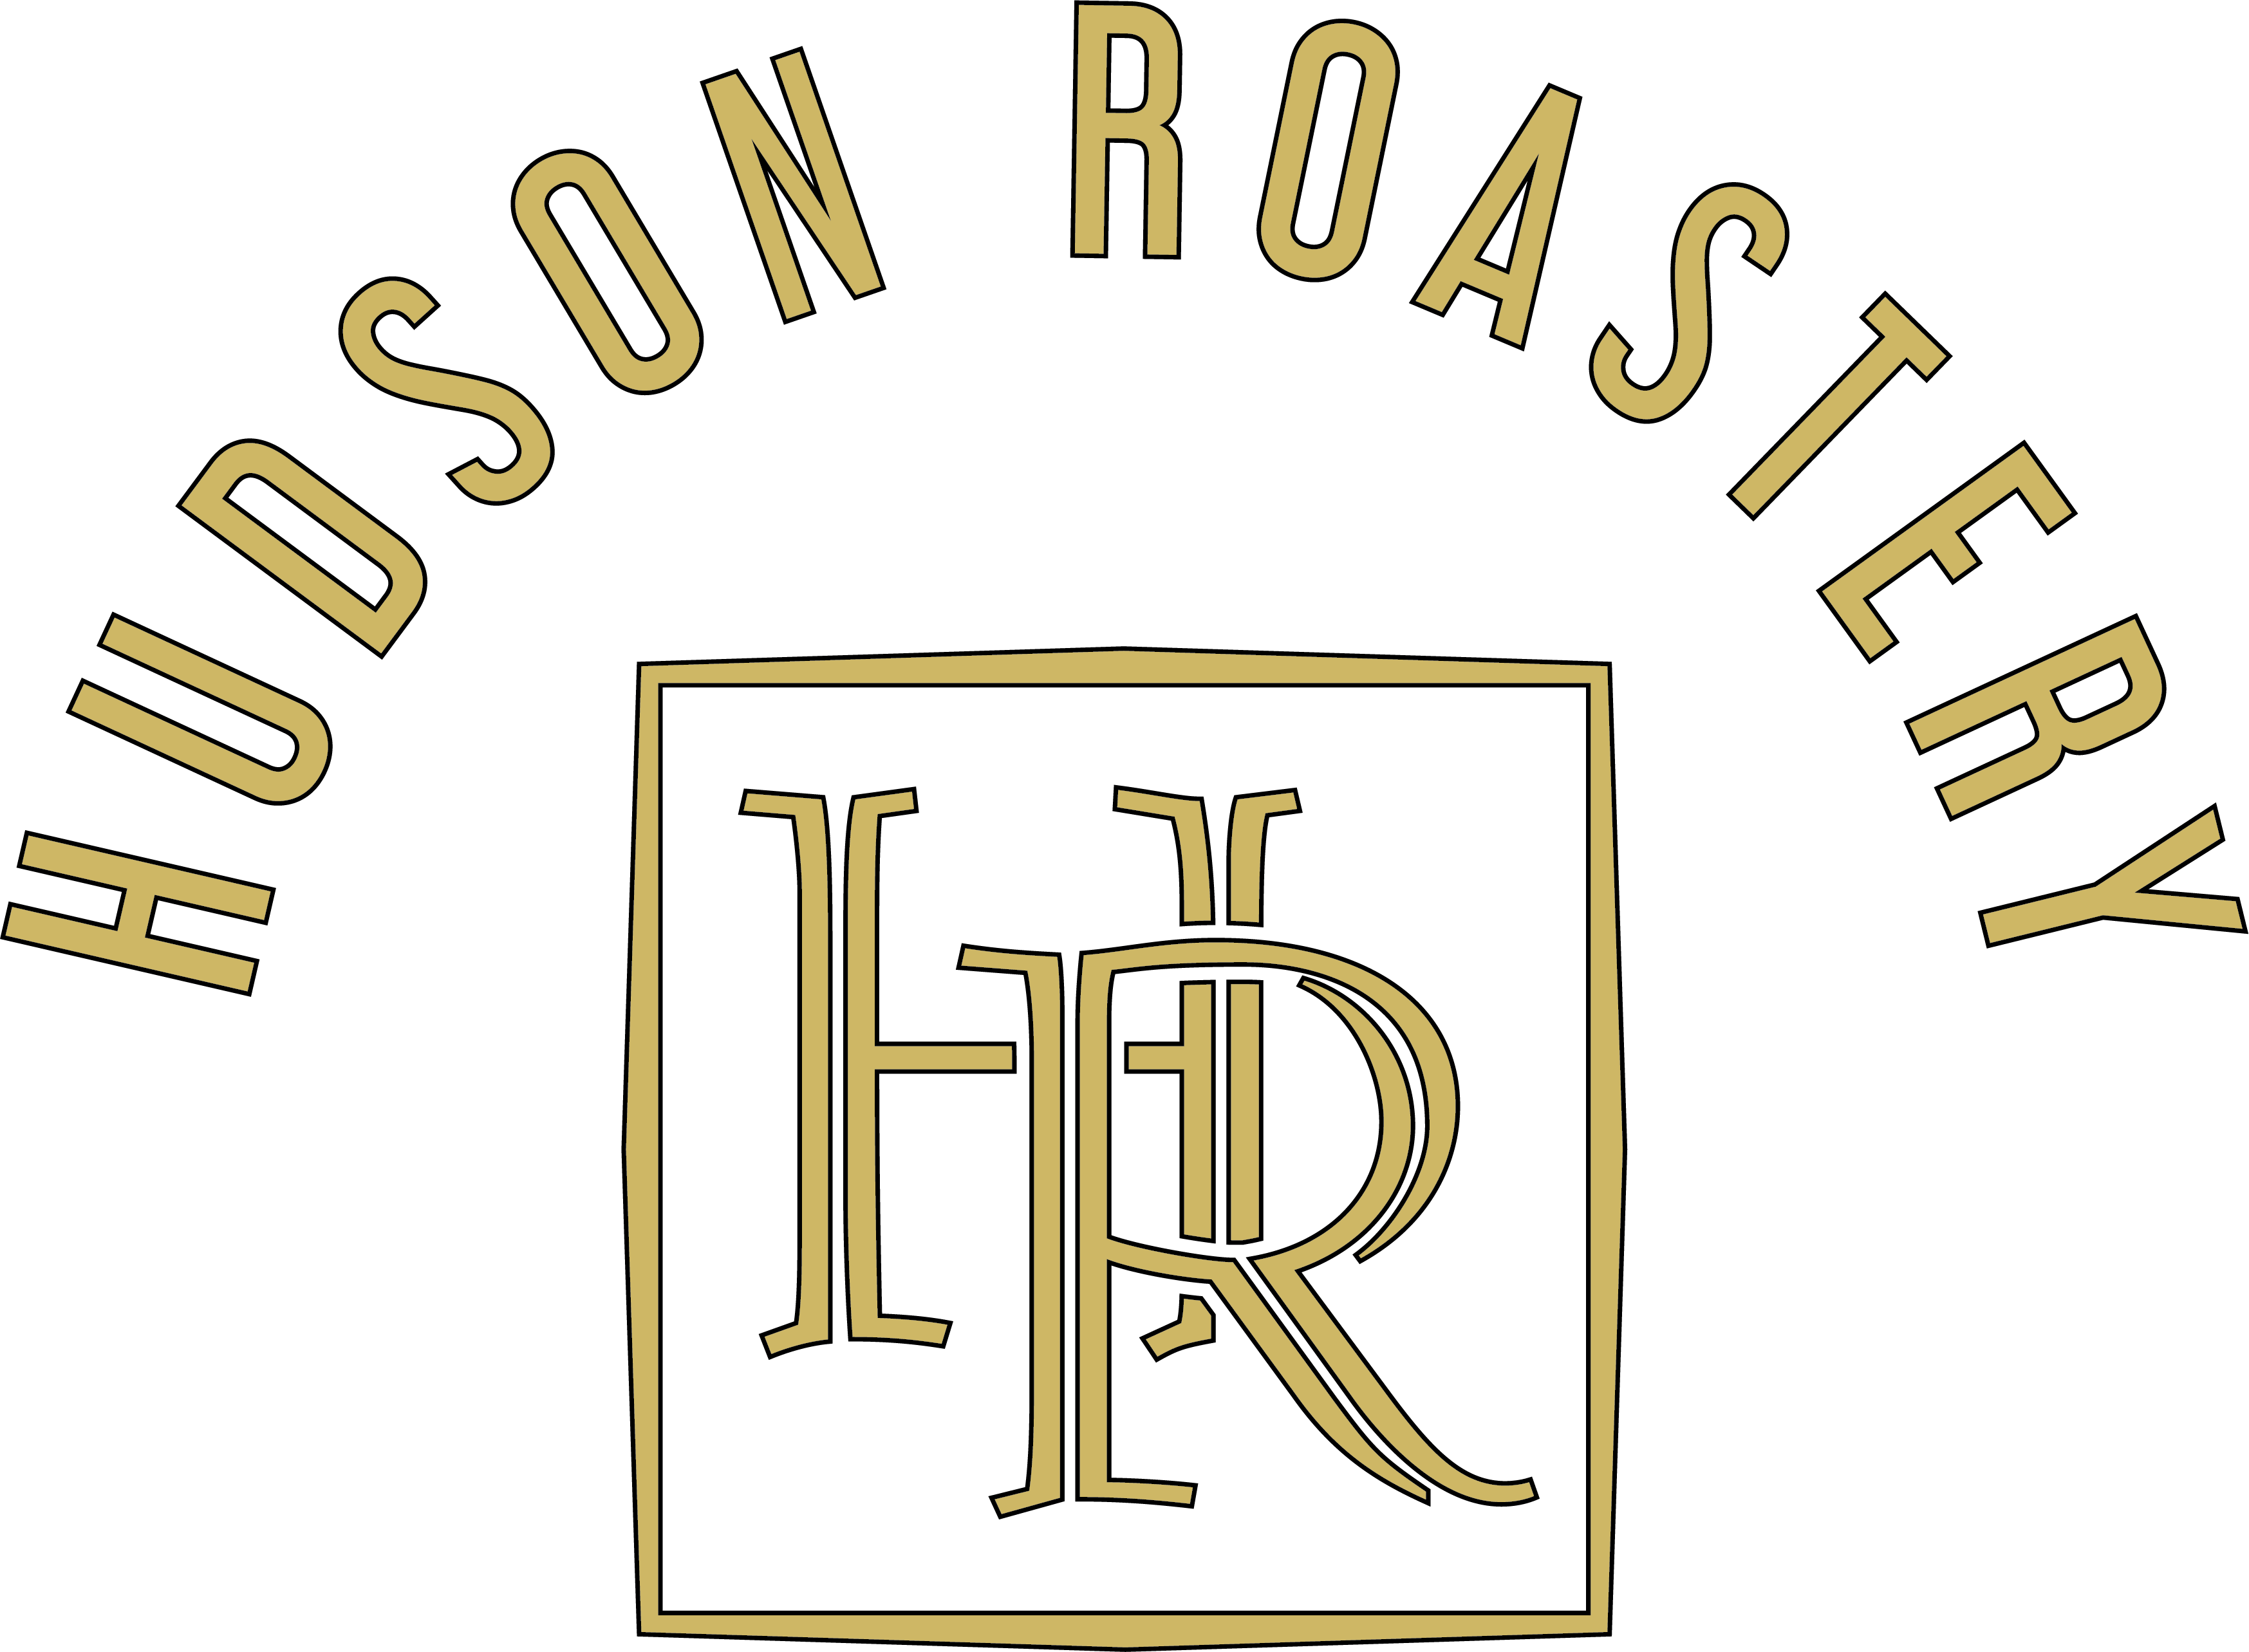 Hudson Roastery